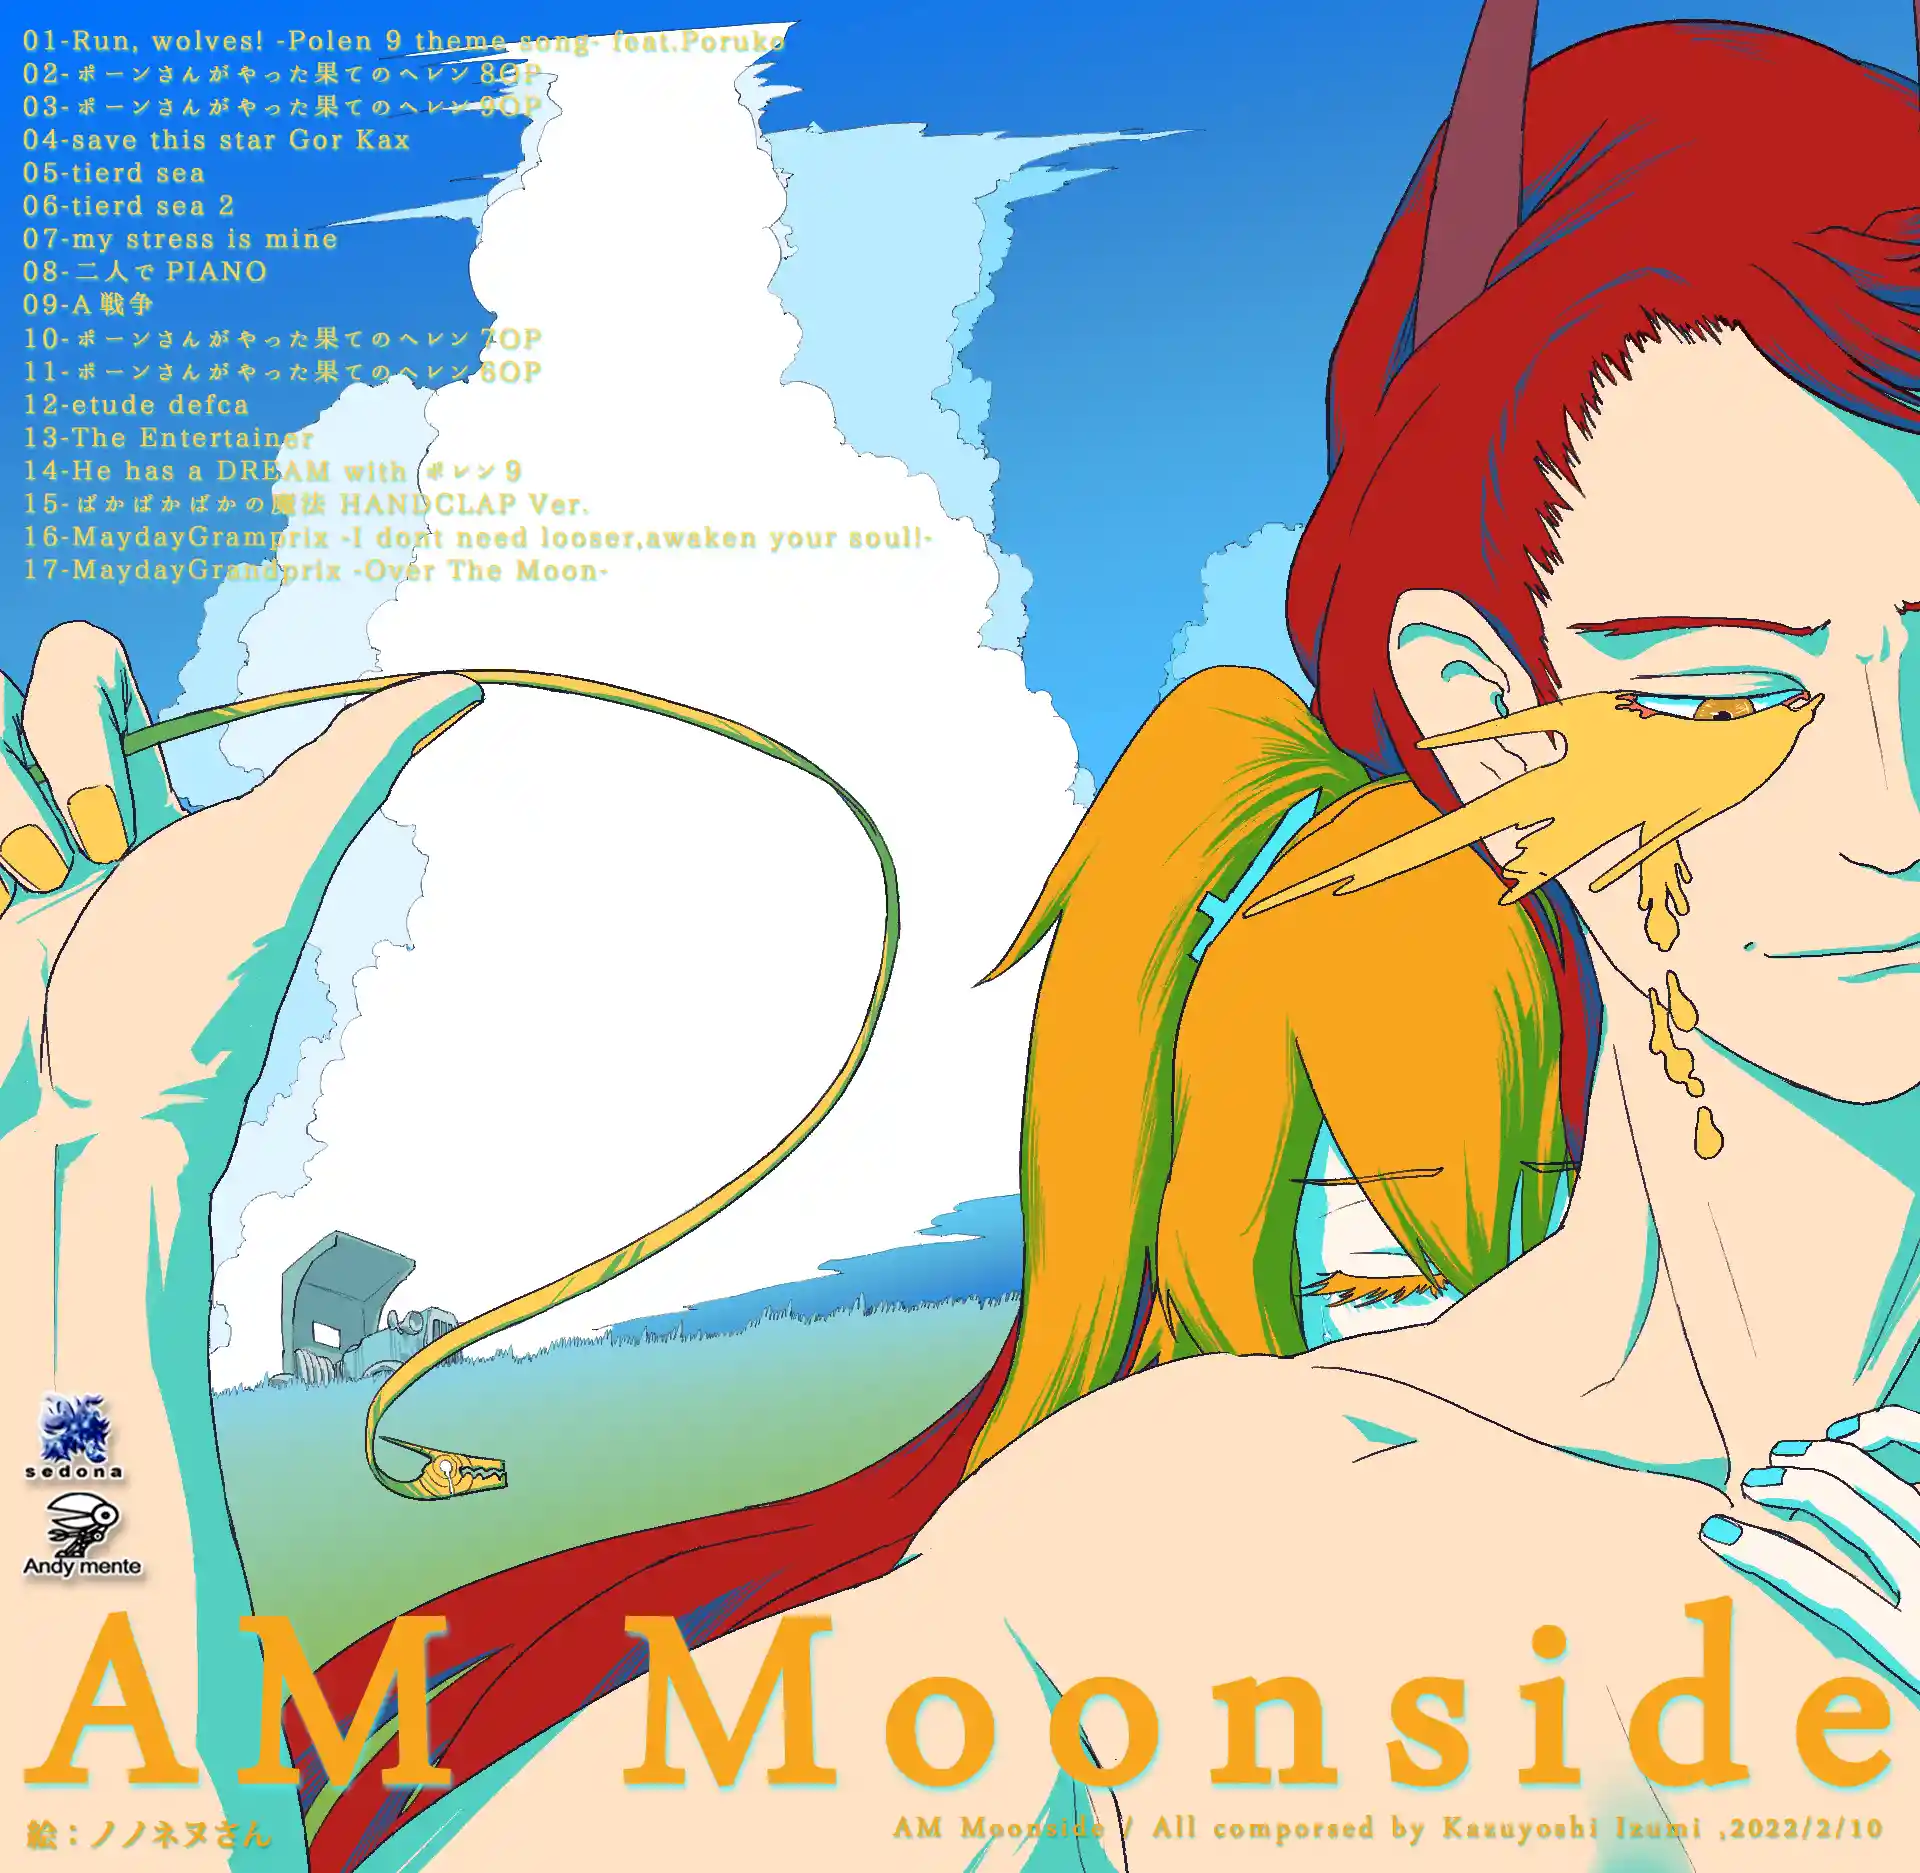 AM Moonside